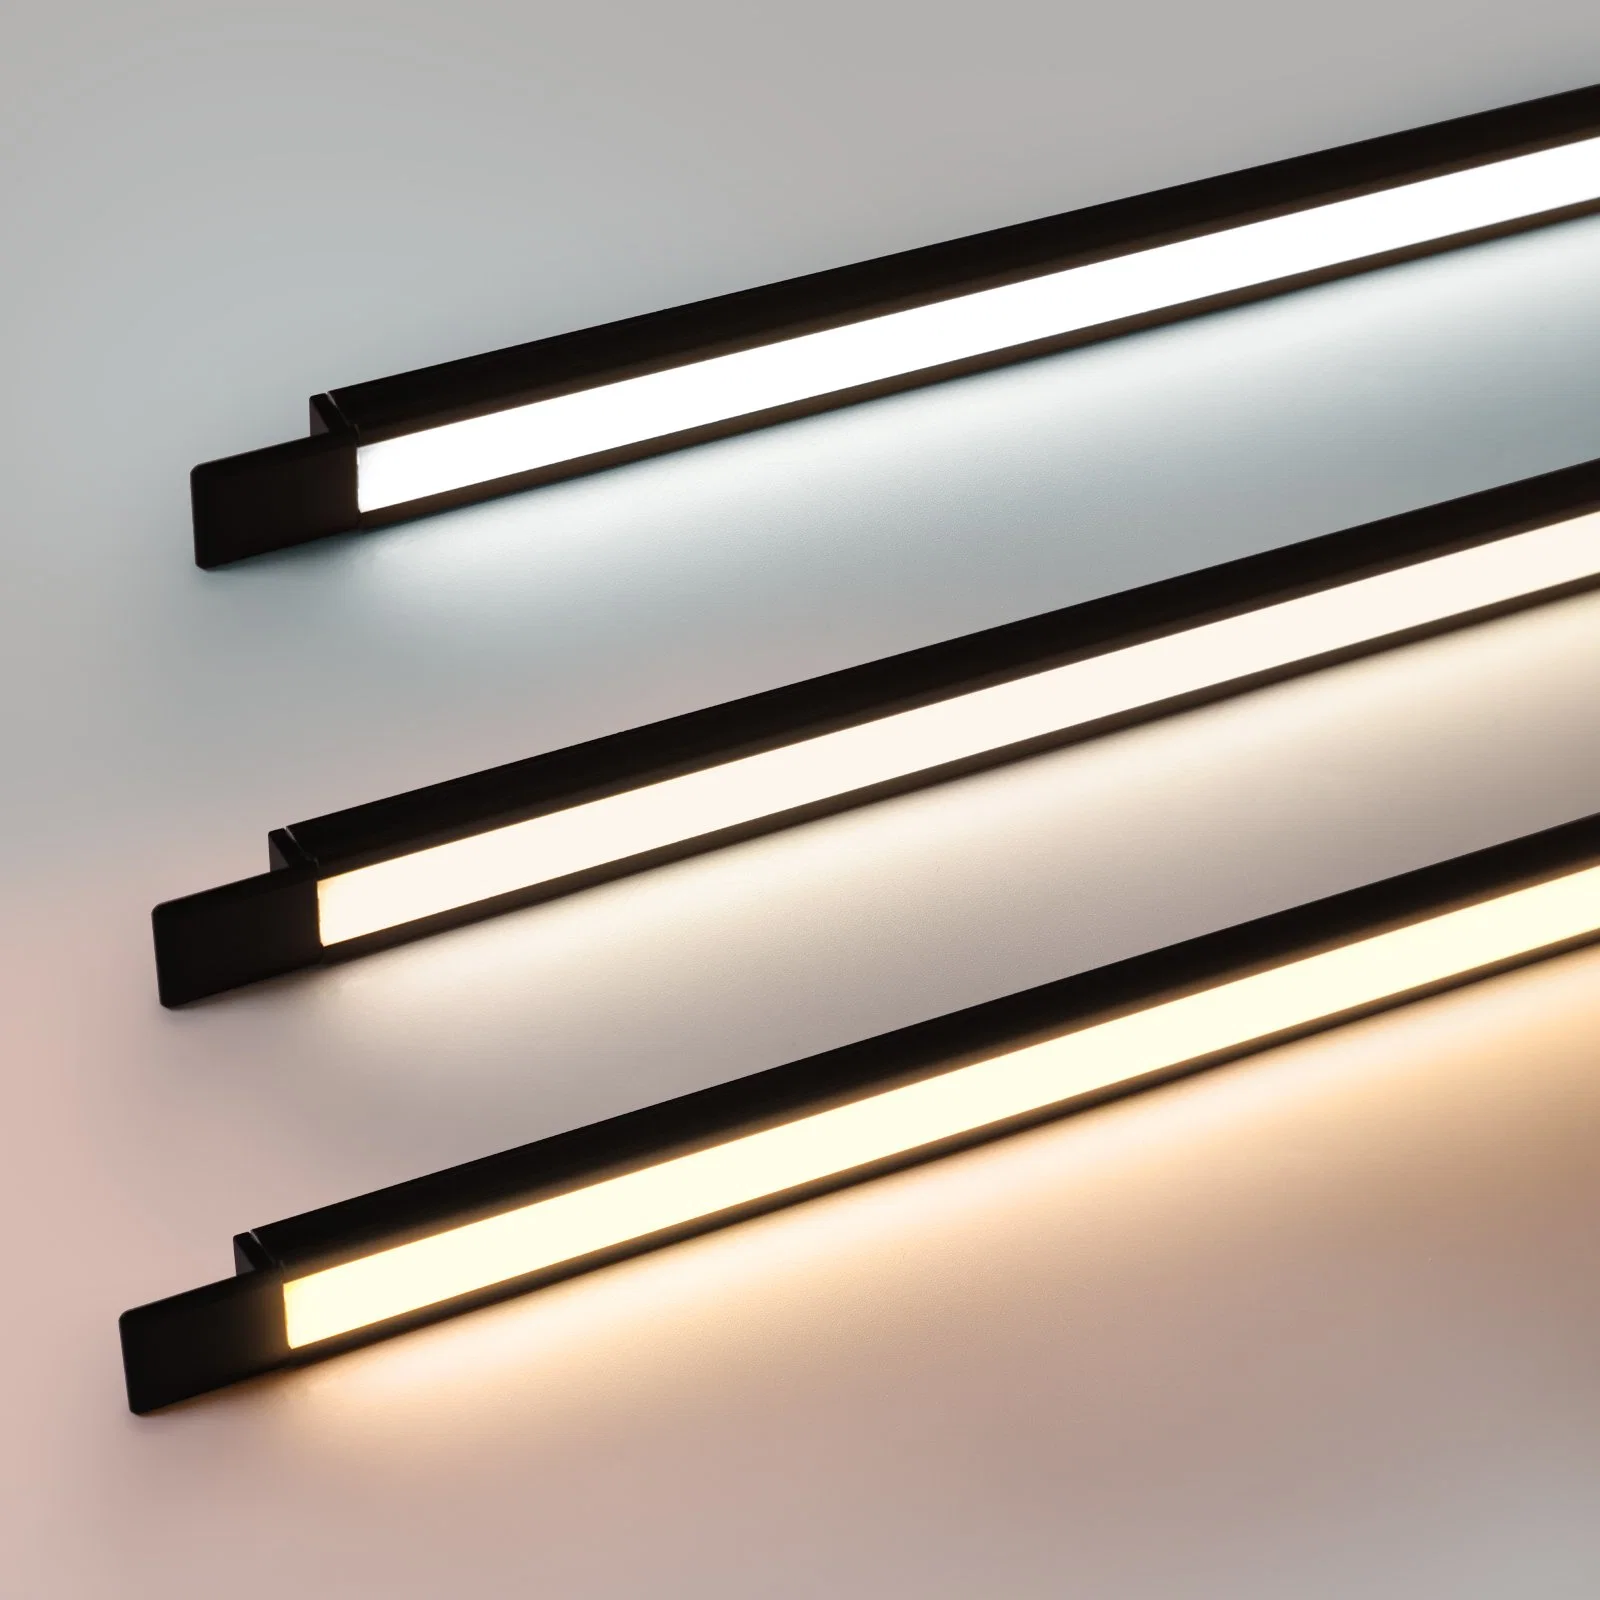 Professional 12V Recess Linear Light Mounted Under Mini Kitchen Lighting LED Cabinet Light